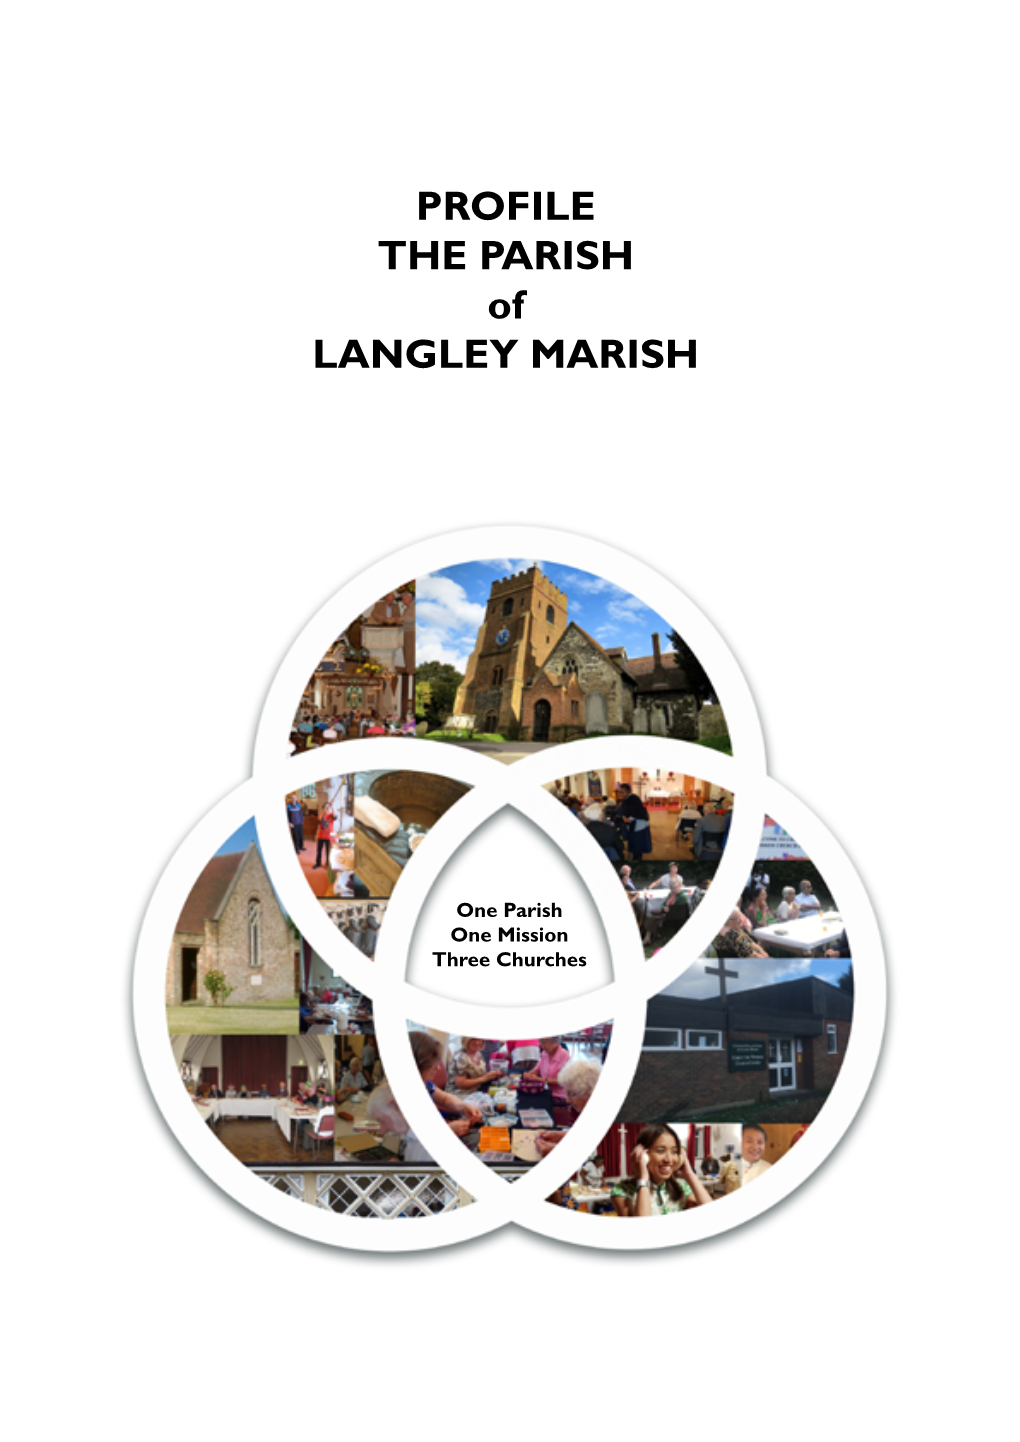 PROFILE the PARISH of LANGLEY MARISH